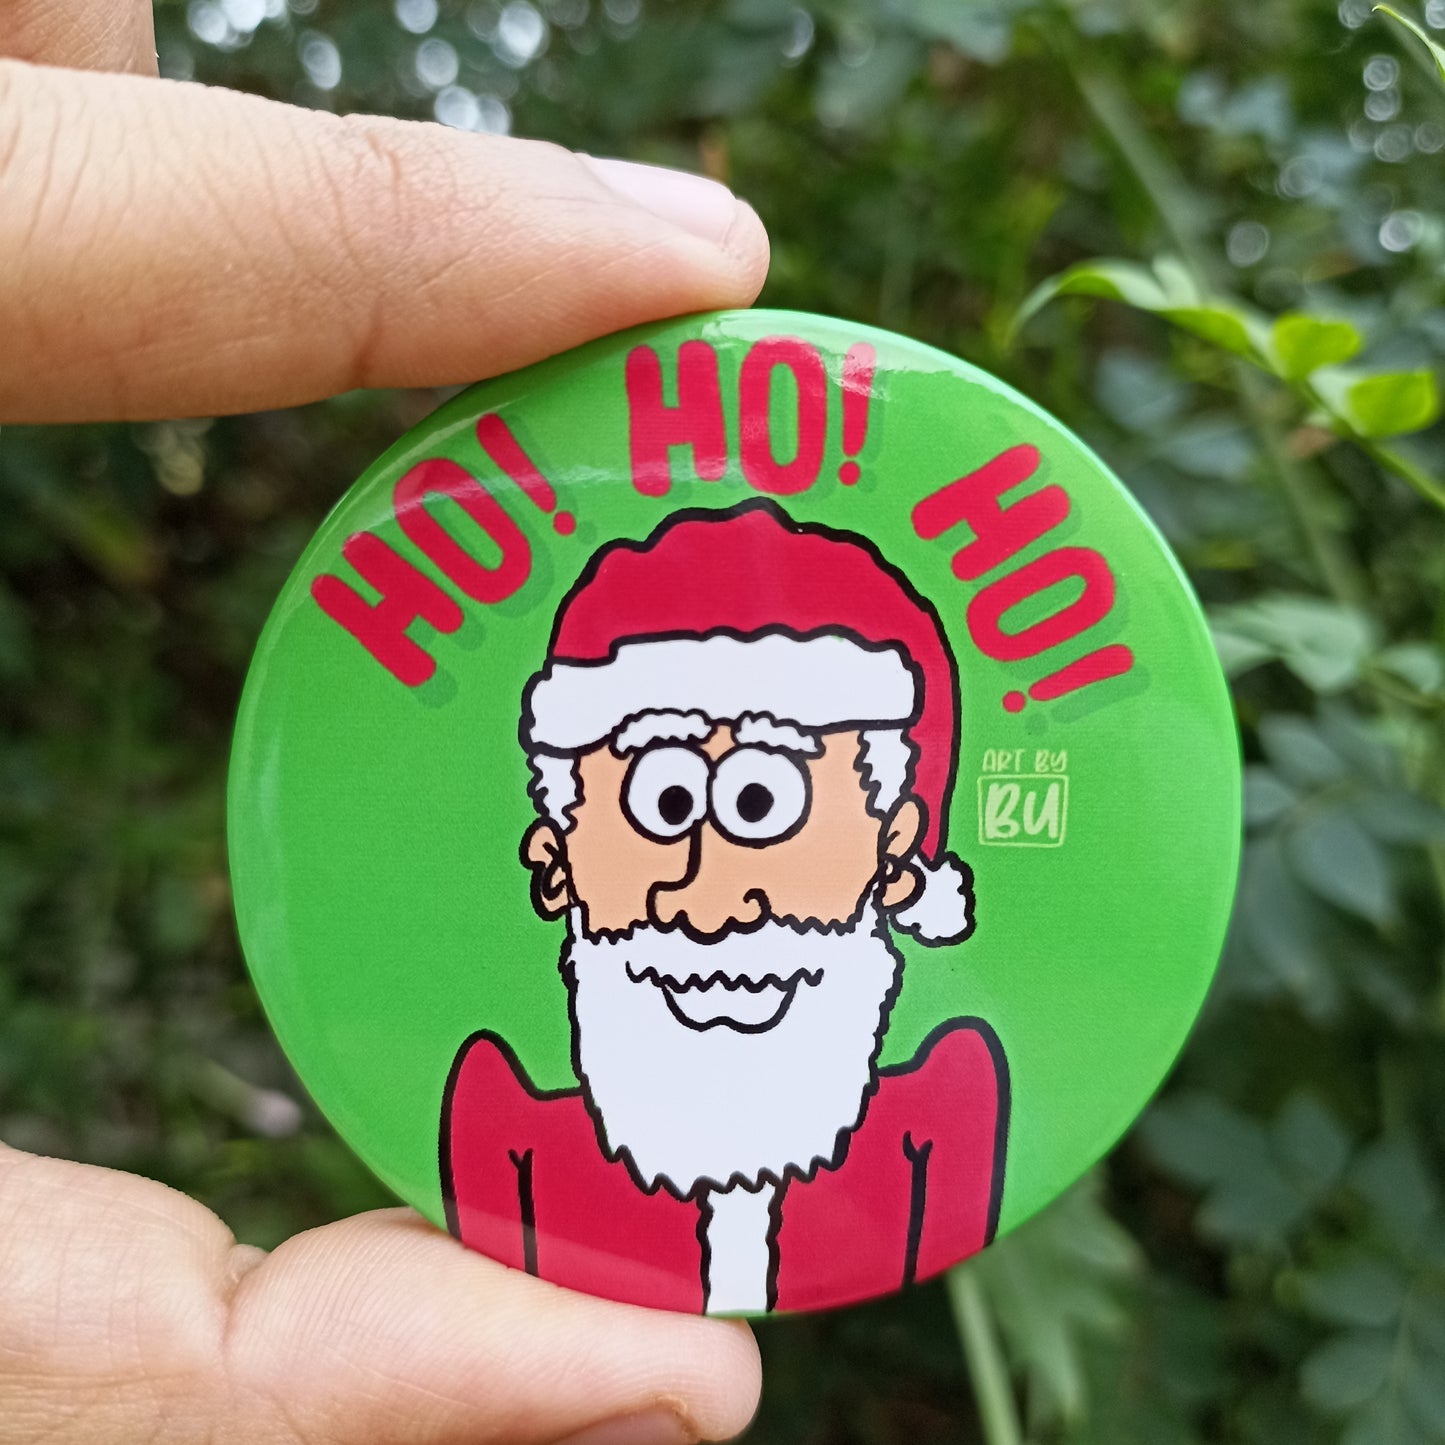 Santa Claus badges